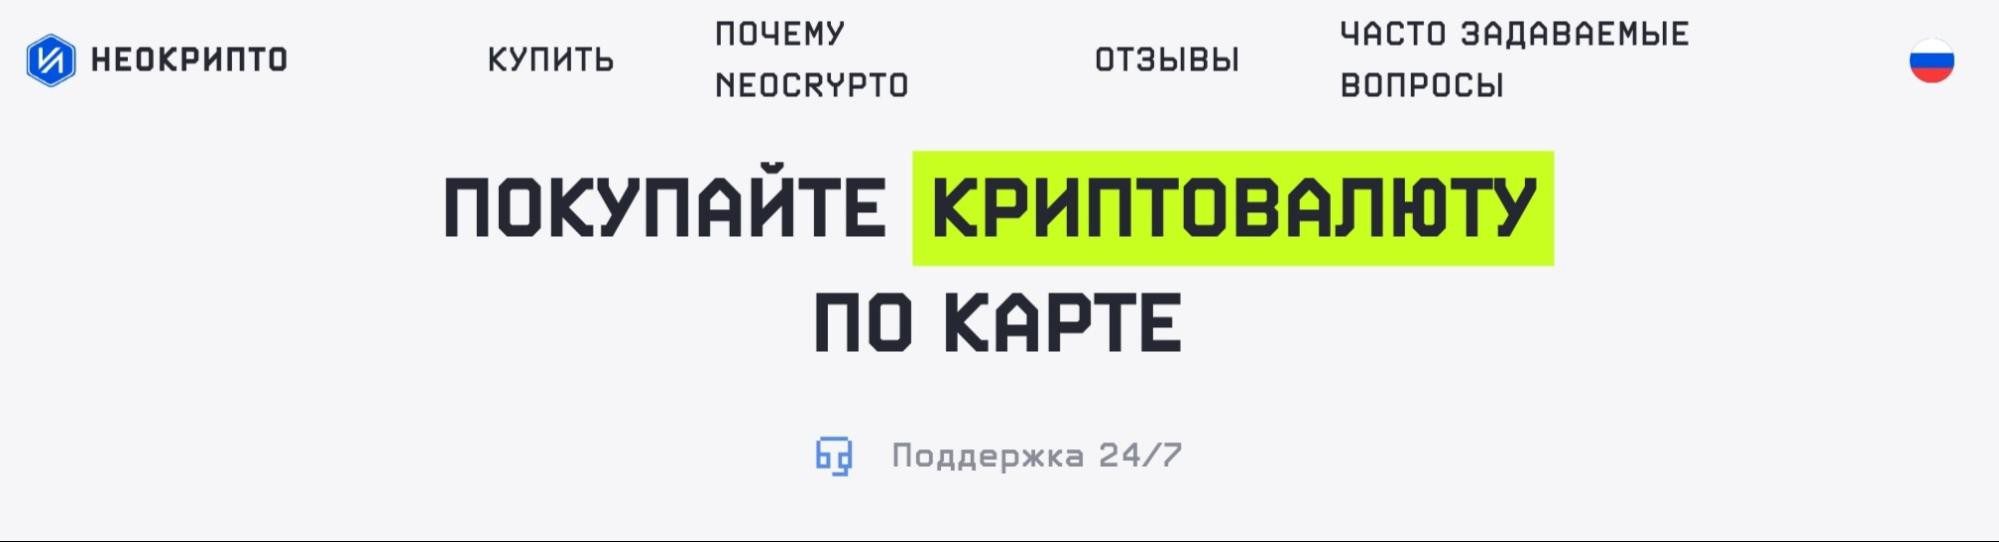 Neocrypto онлайн обменник